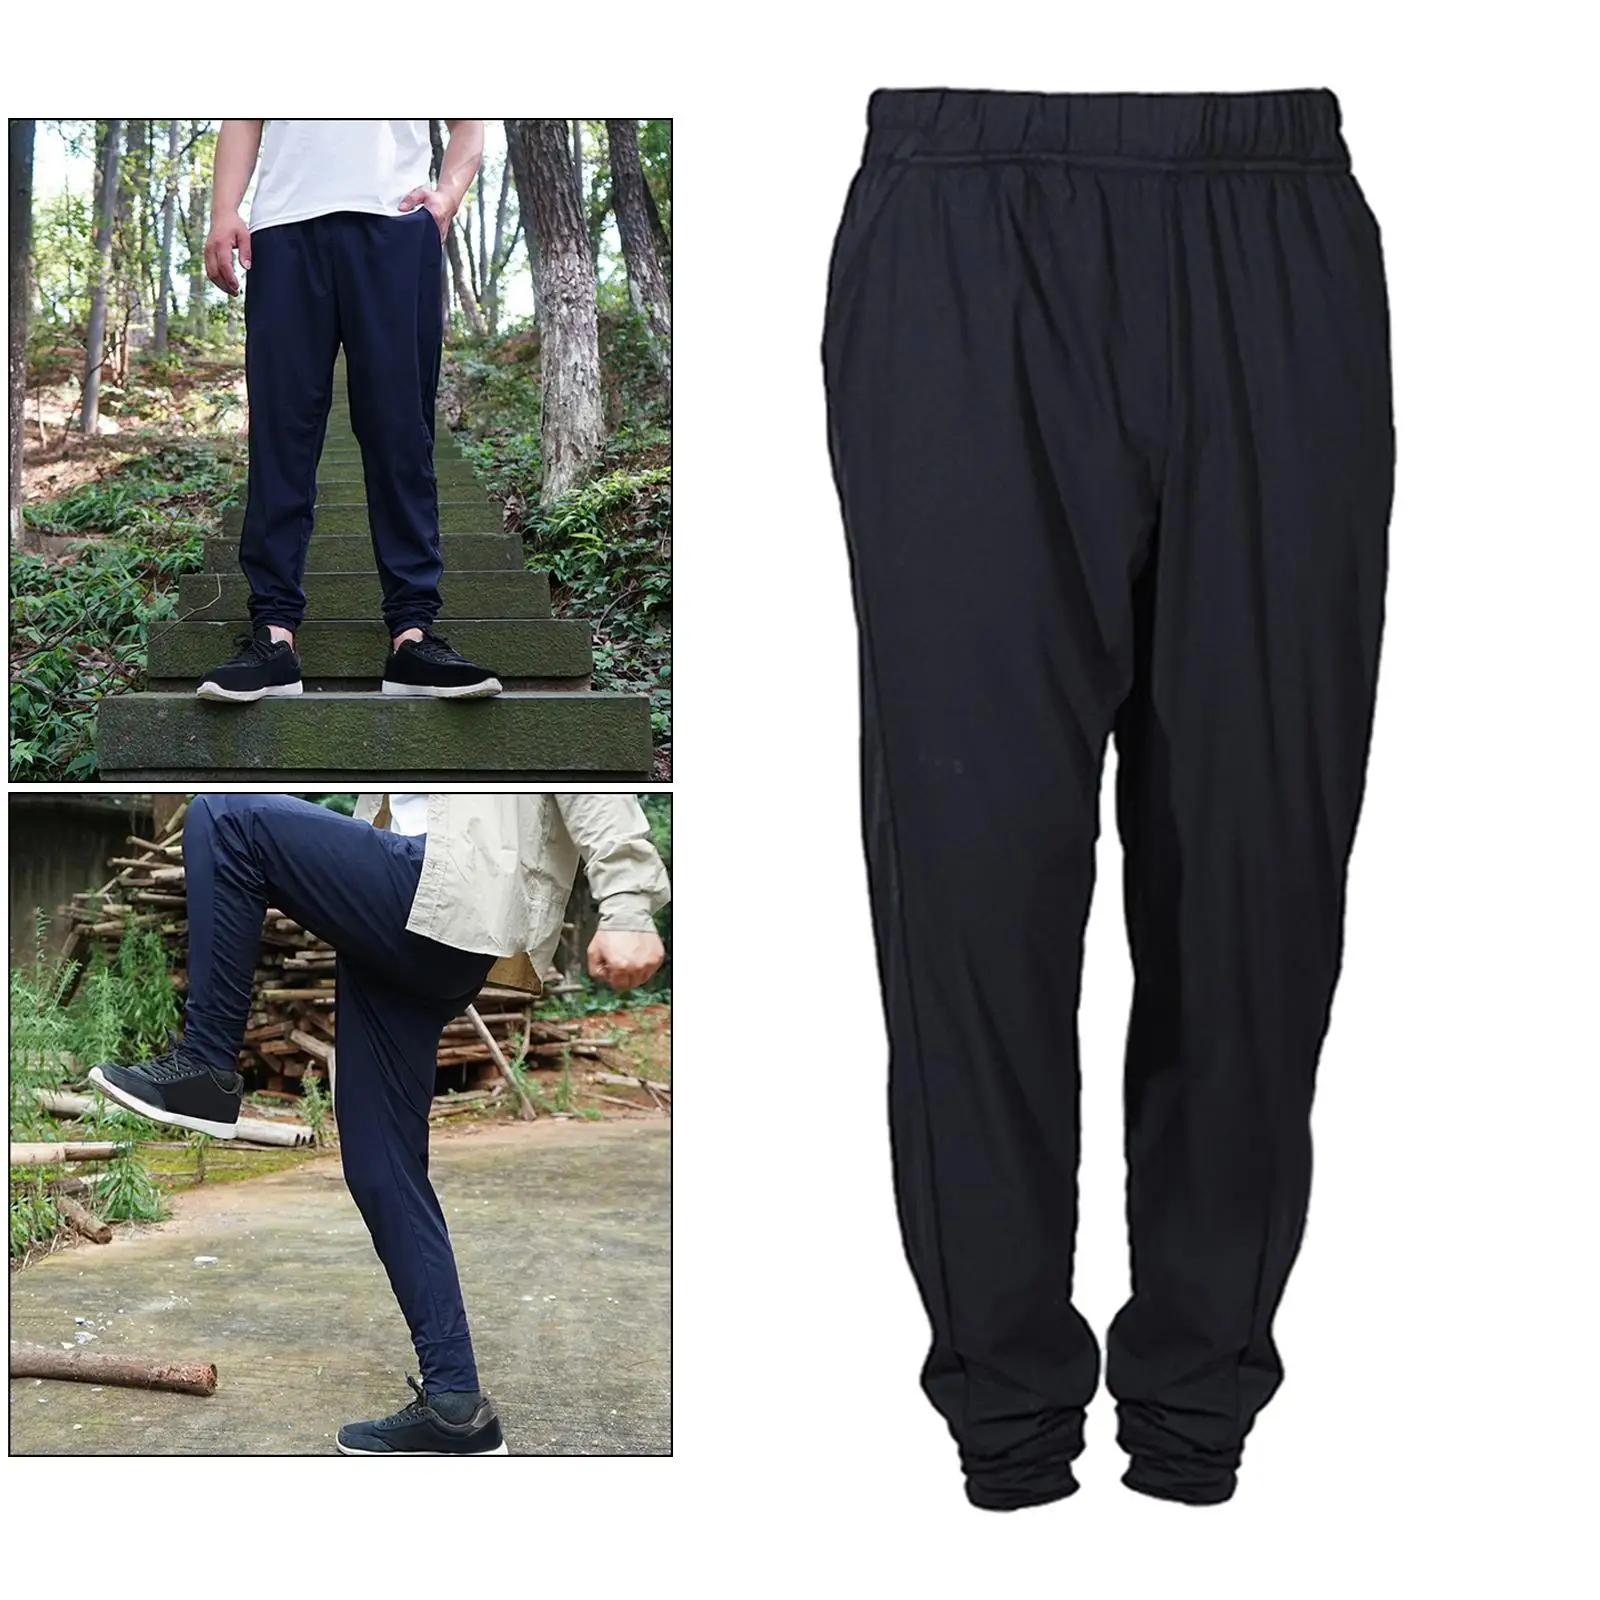 Elastic Waist Hiking Water Resistant Pants  Athletic Lightweight Breathable Sweatpants Casual Pants Black